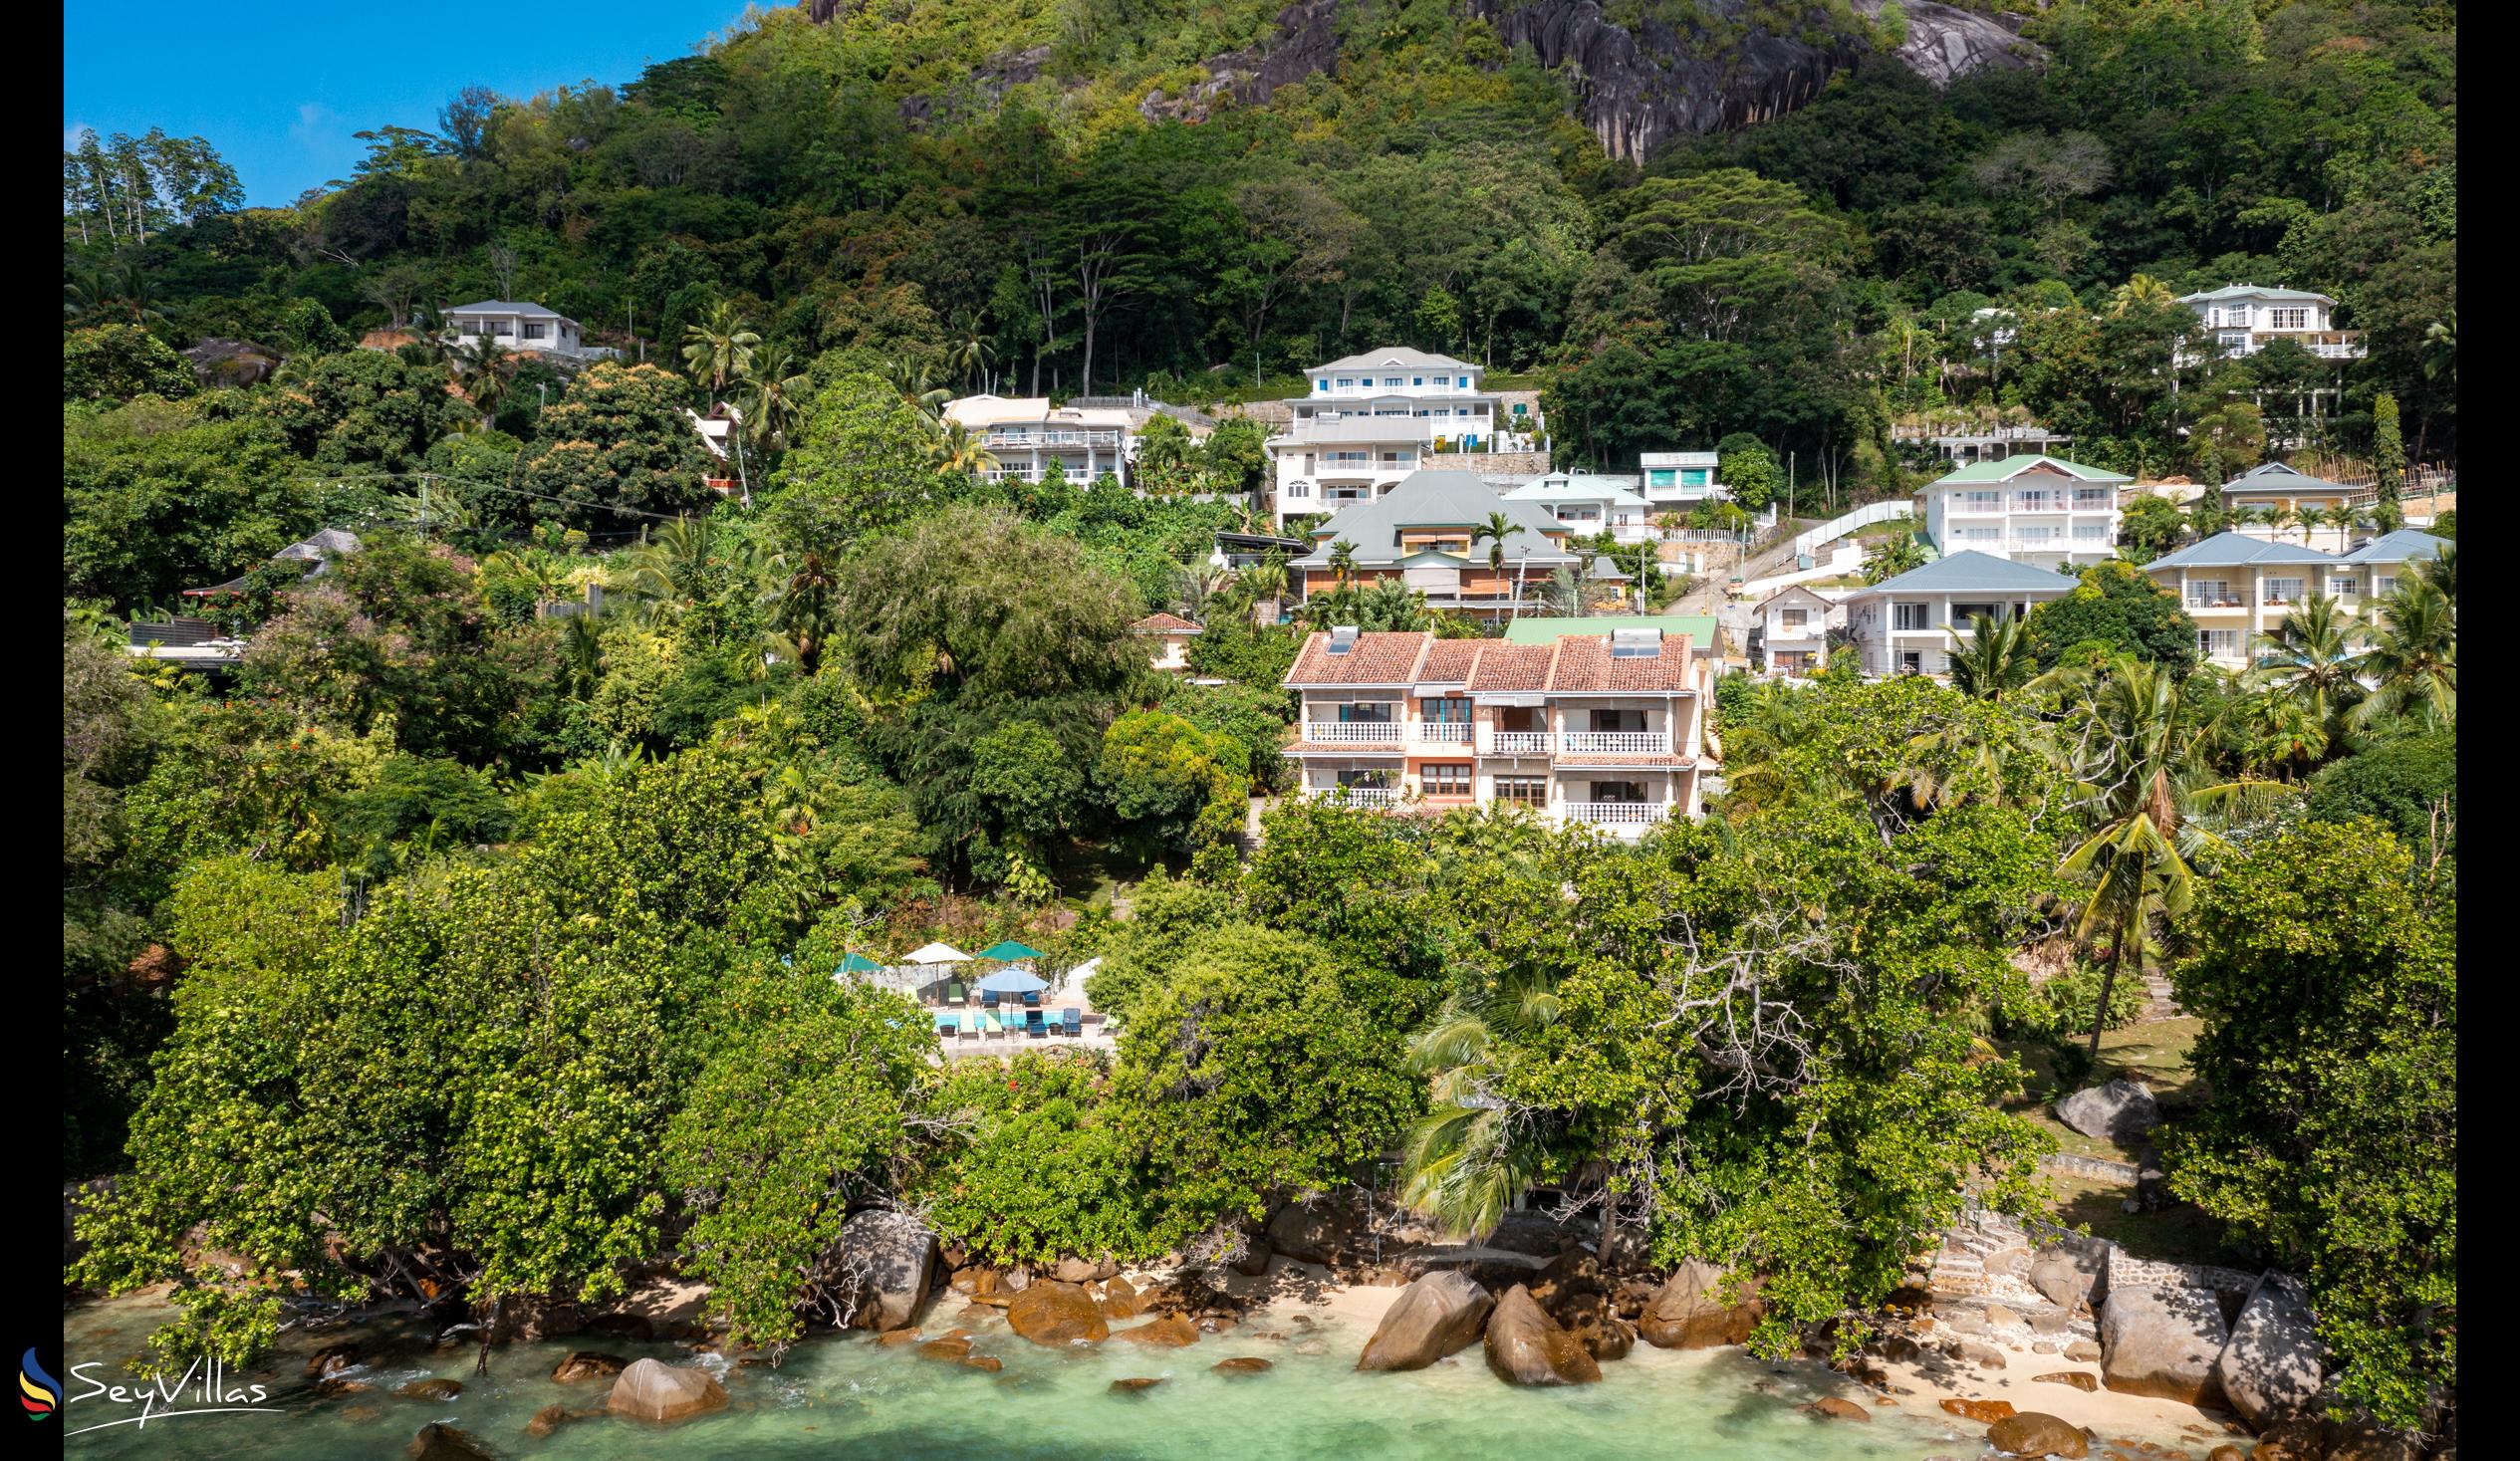 Photo 3: Bel Horizon - Outdoor area - Mahé (Seychelles)